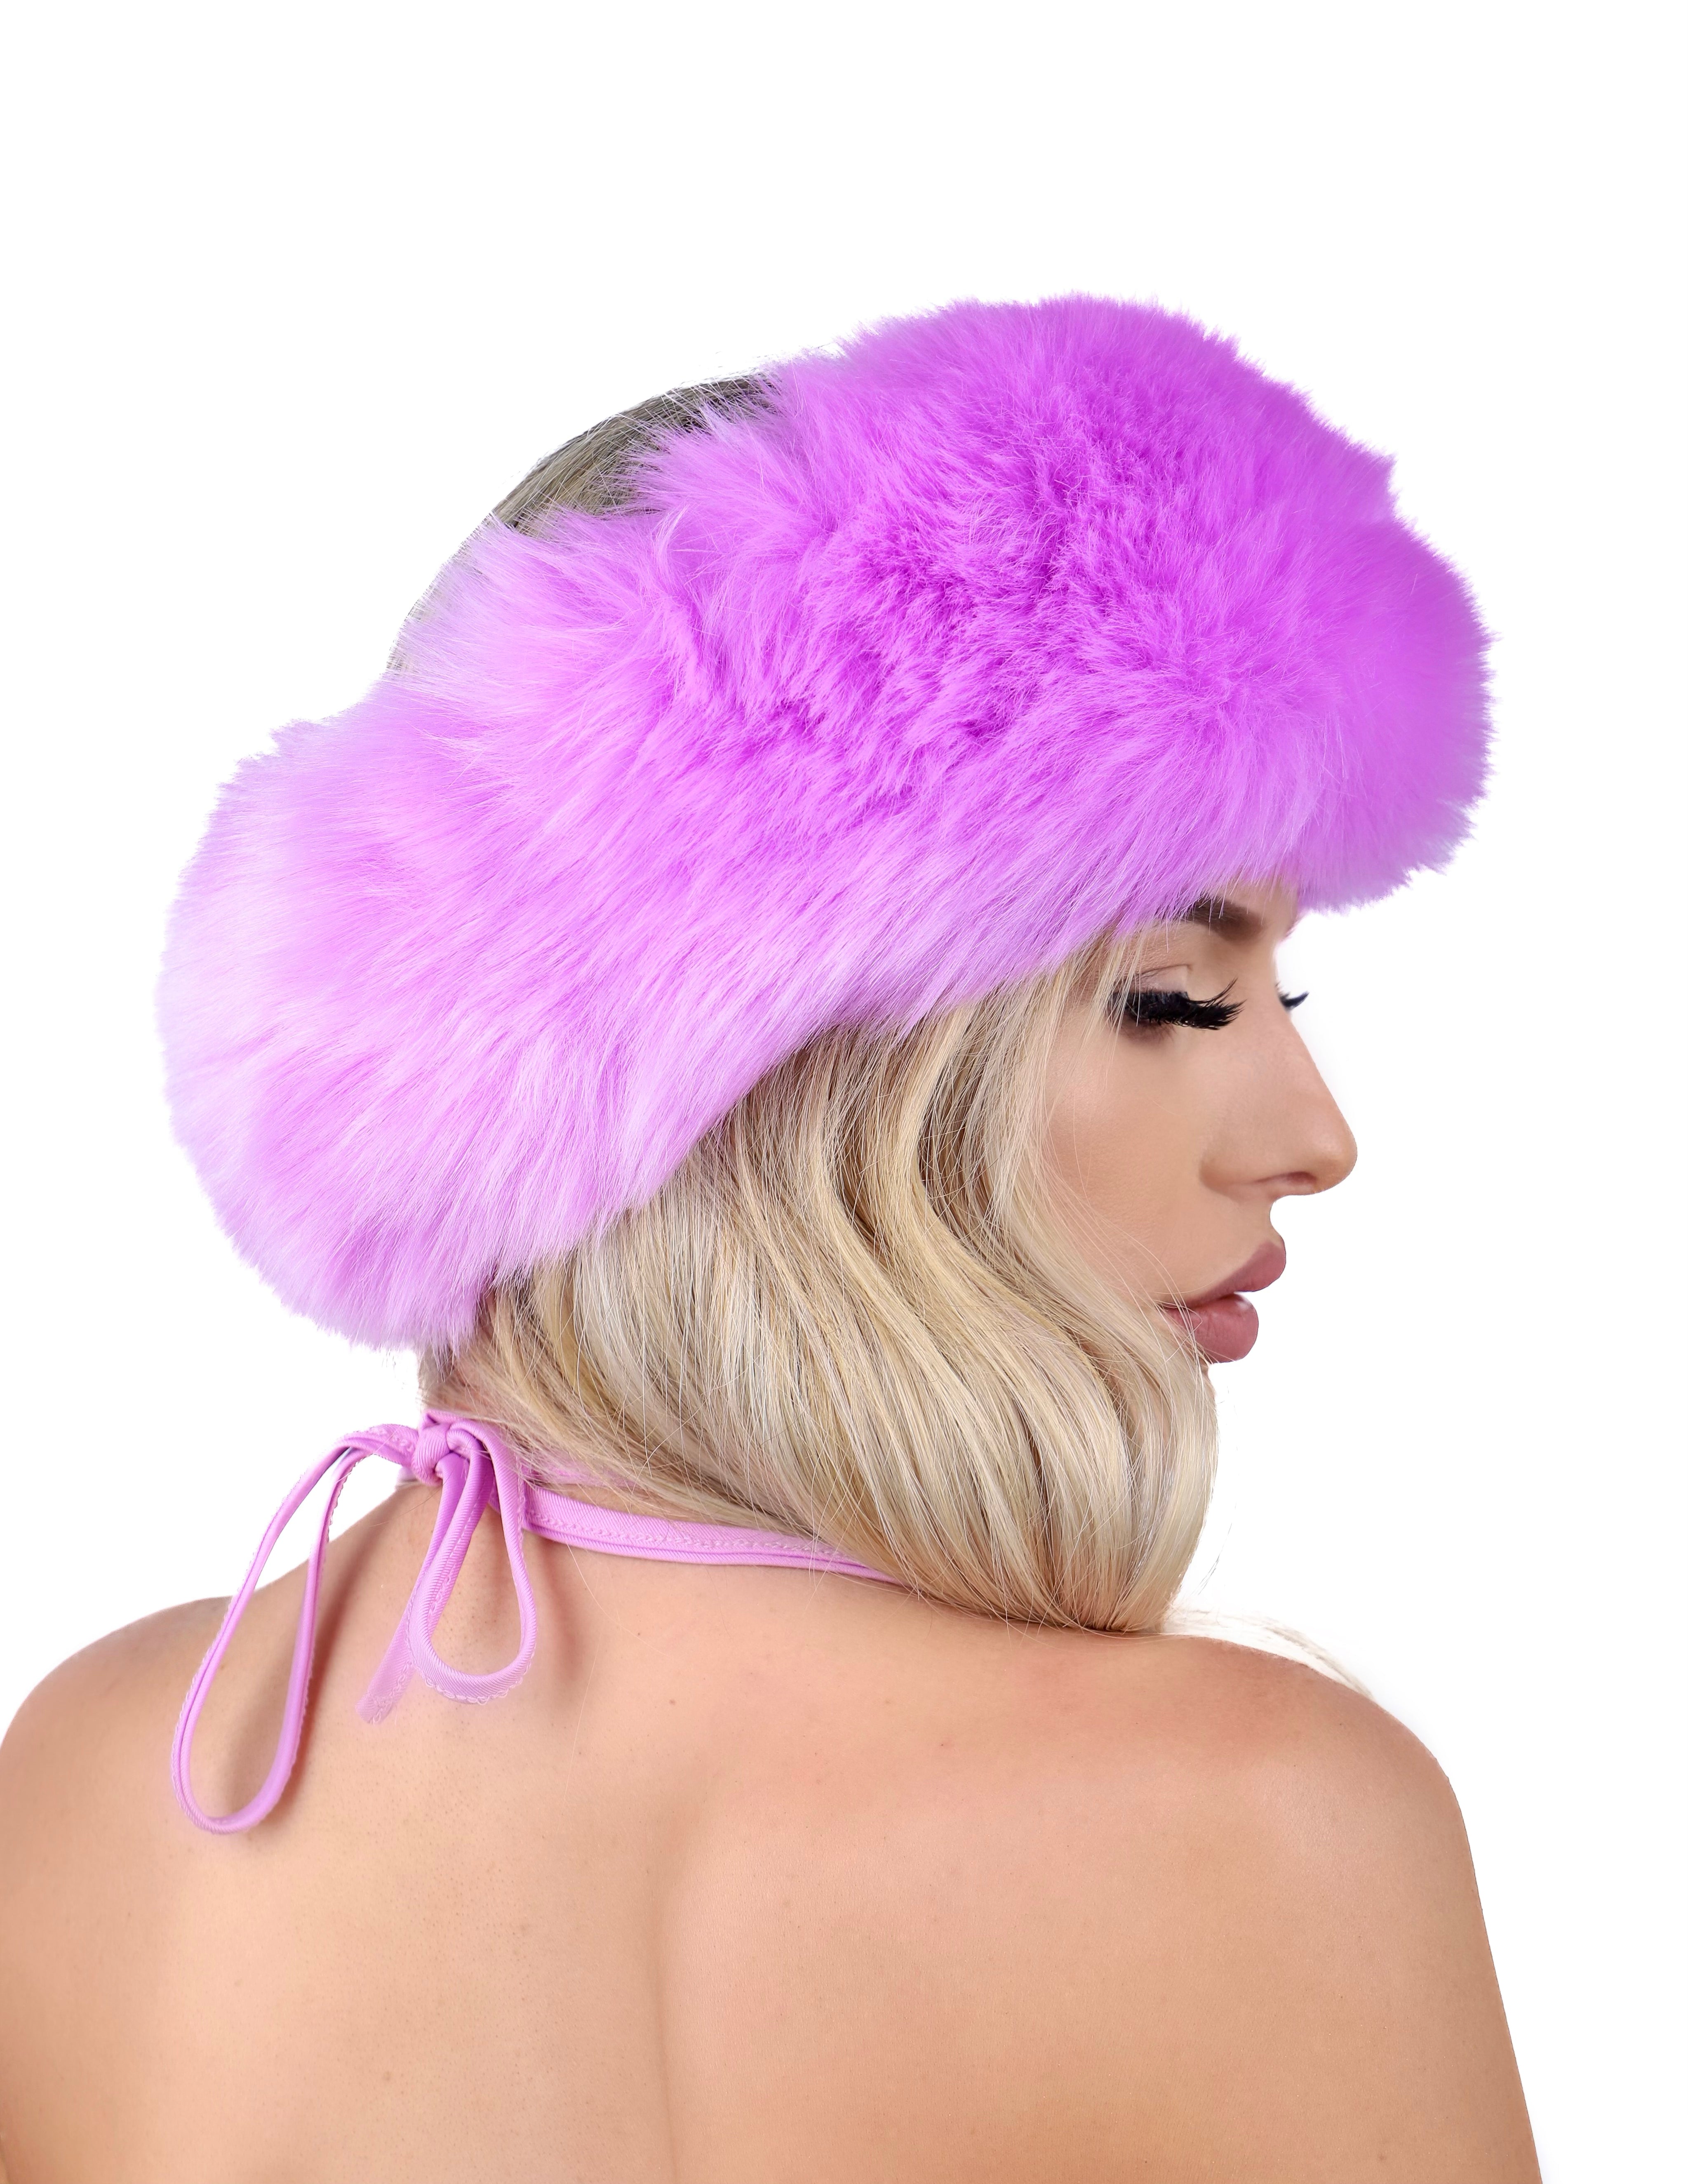 Fuzzy Lavender Headband